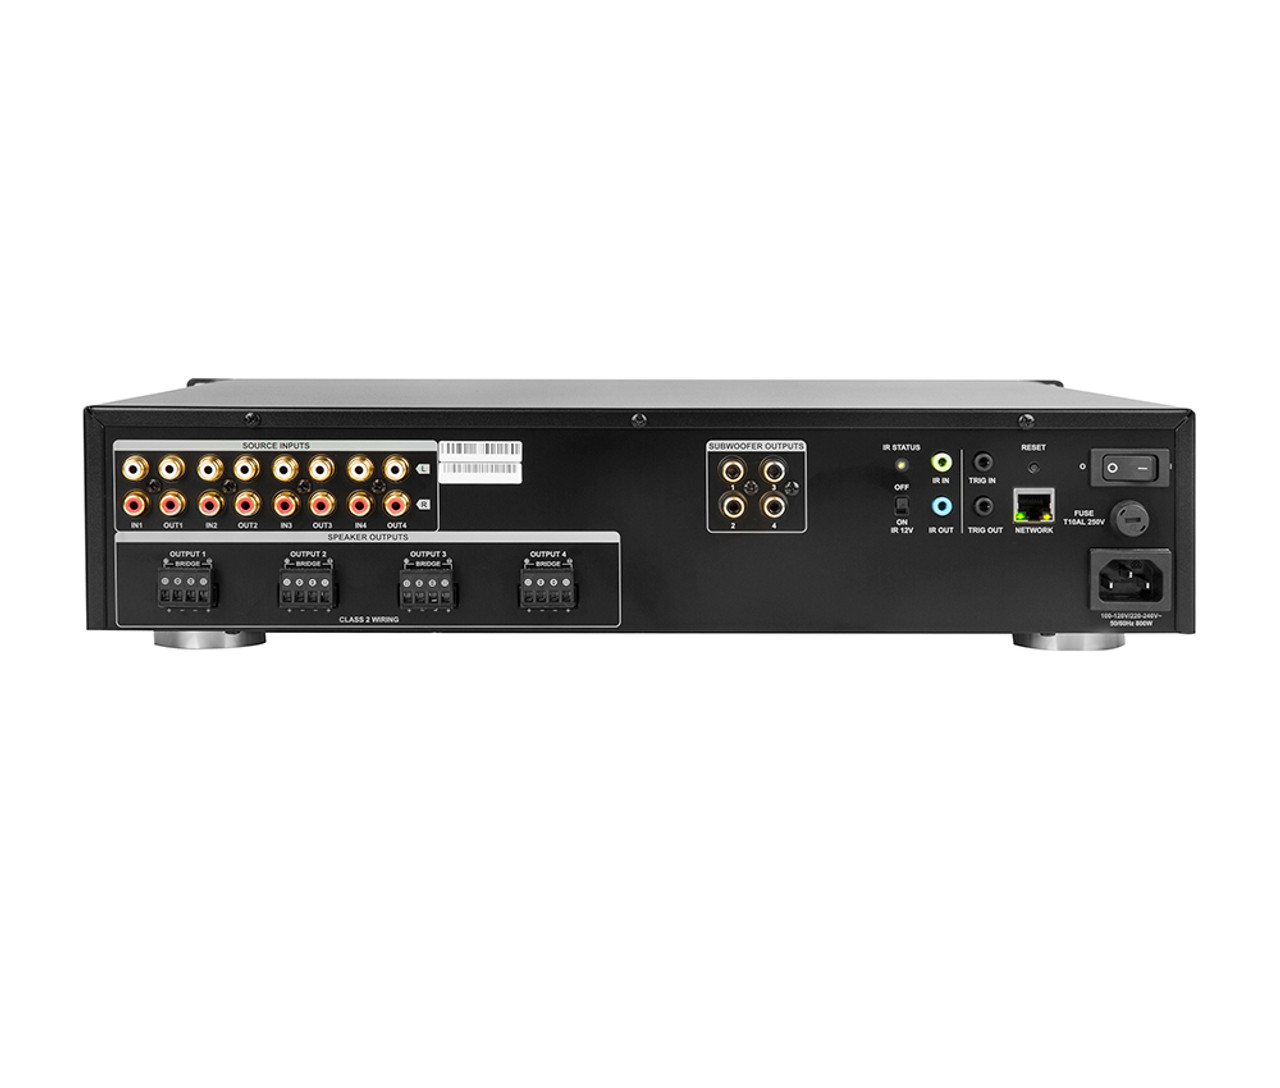 Episode Response 8/12/16 Channels 100W Class-D DSP Amplifier